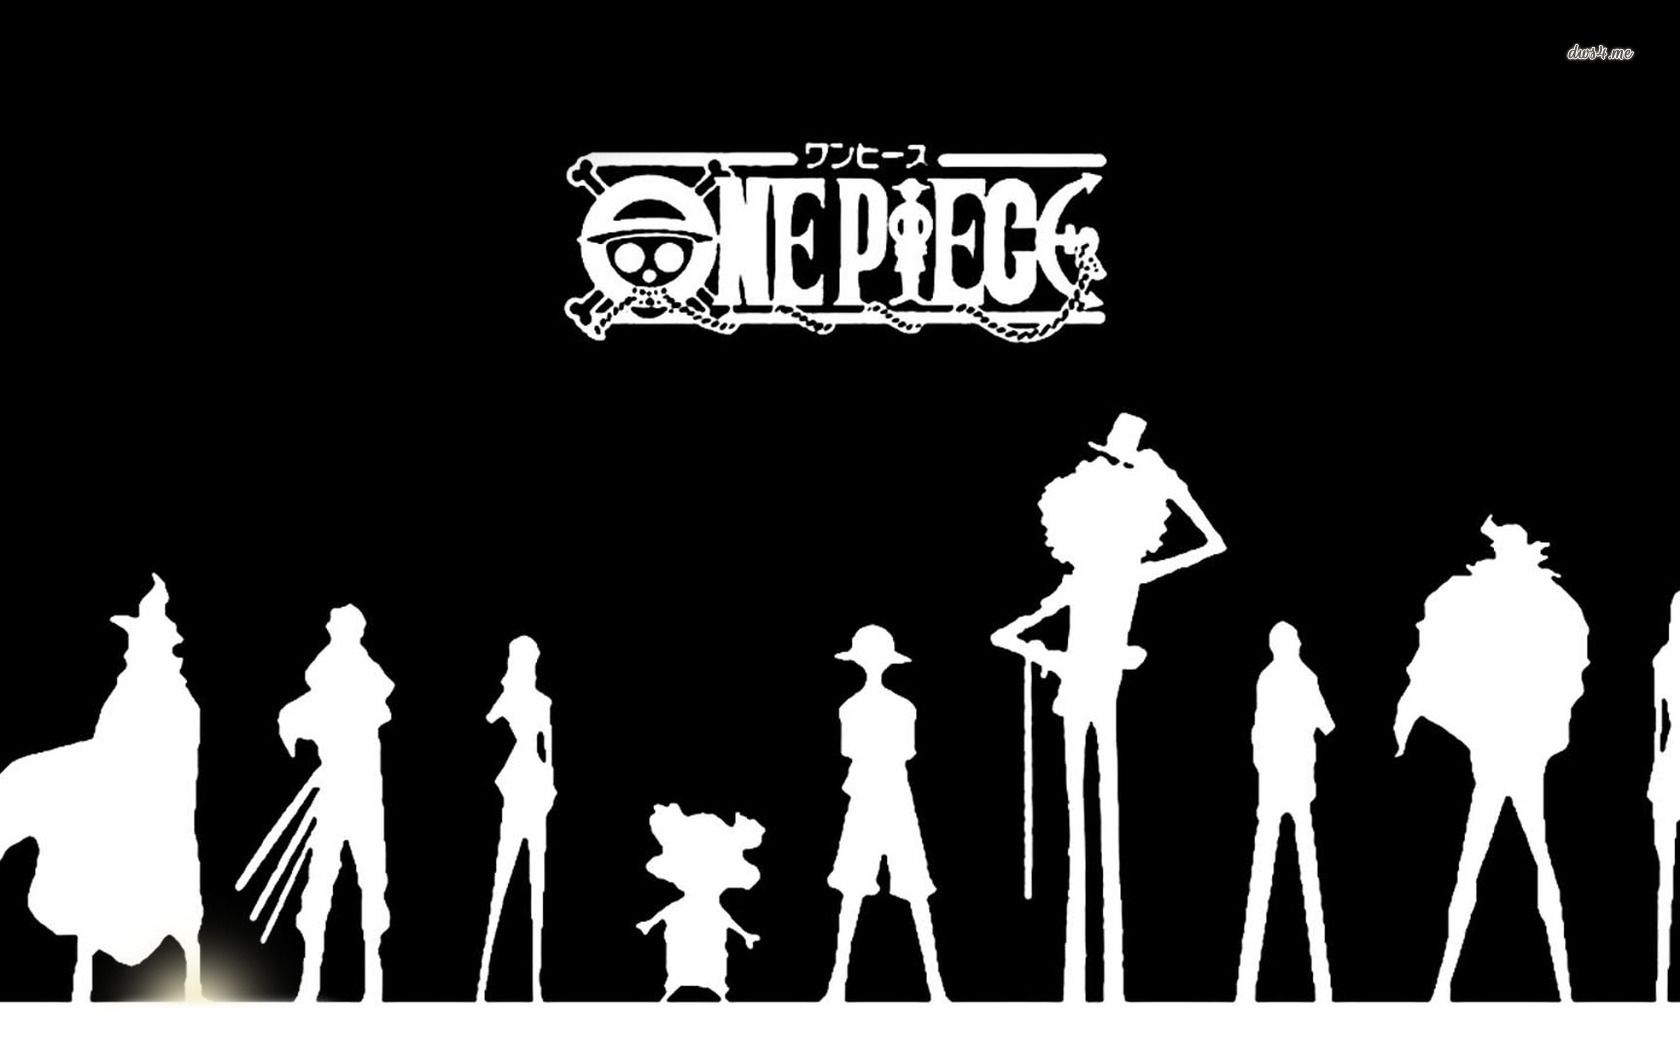 Black One Piece Wallpaper